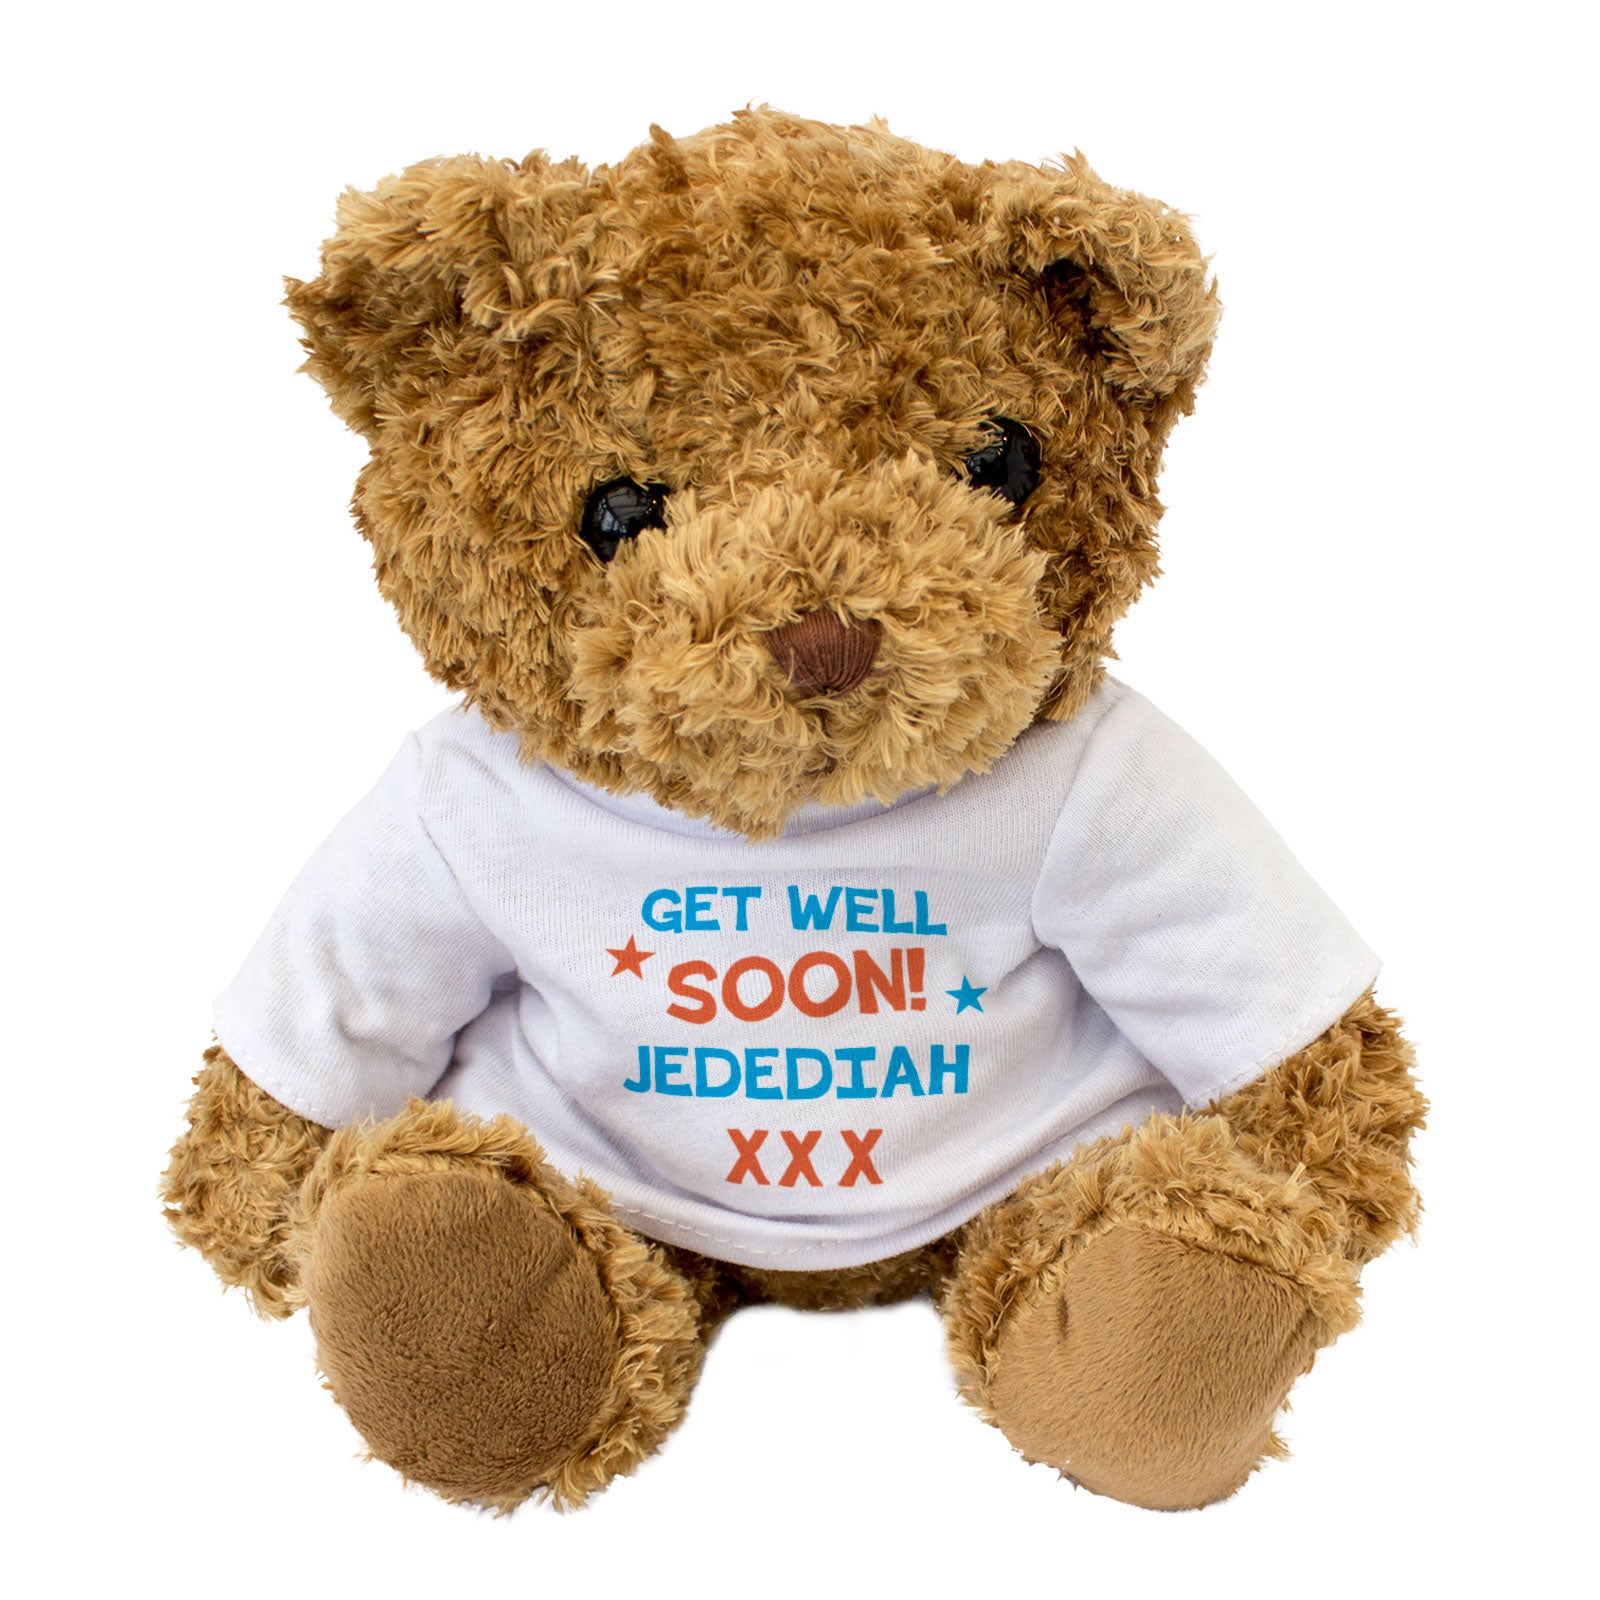 Get Well Soon Jedediah - Teddy Bear